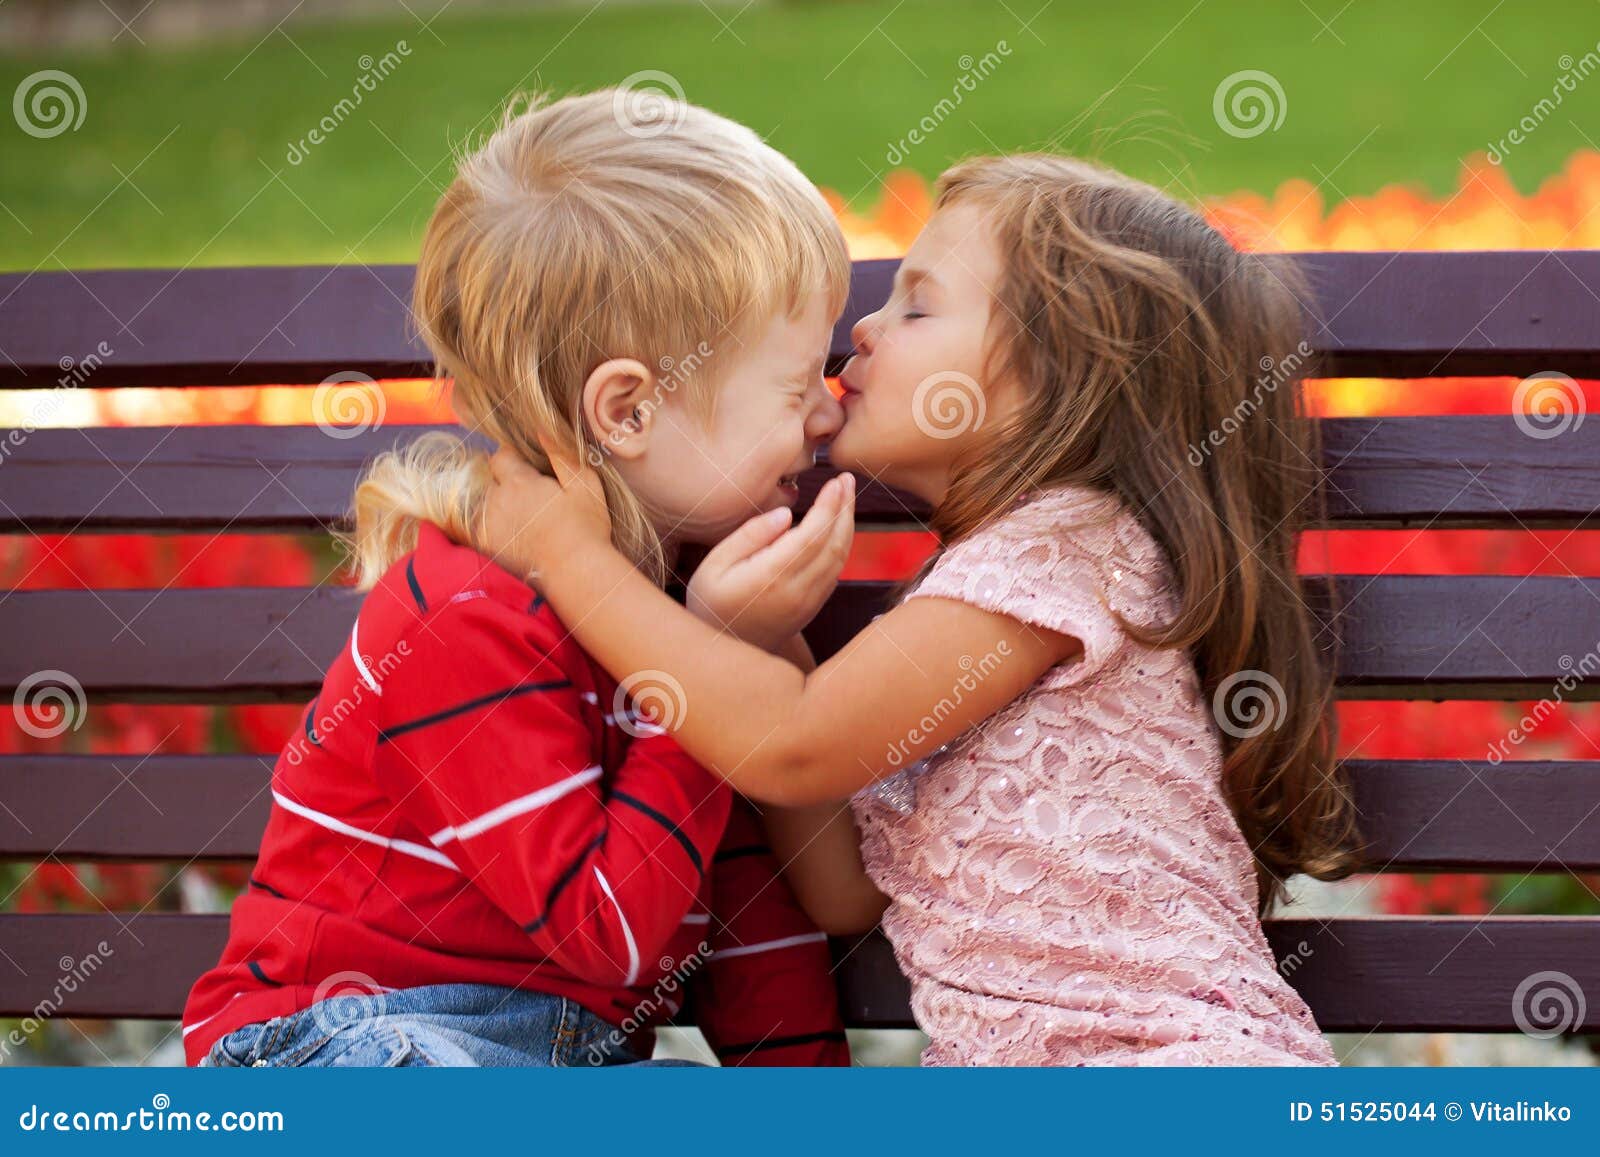 couple-kids-loving-each-other-hugging-love-concept-kissing-51525044.jpg